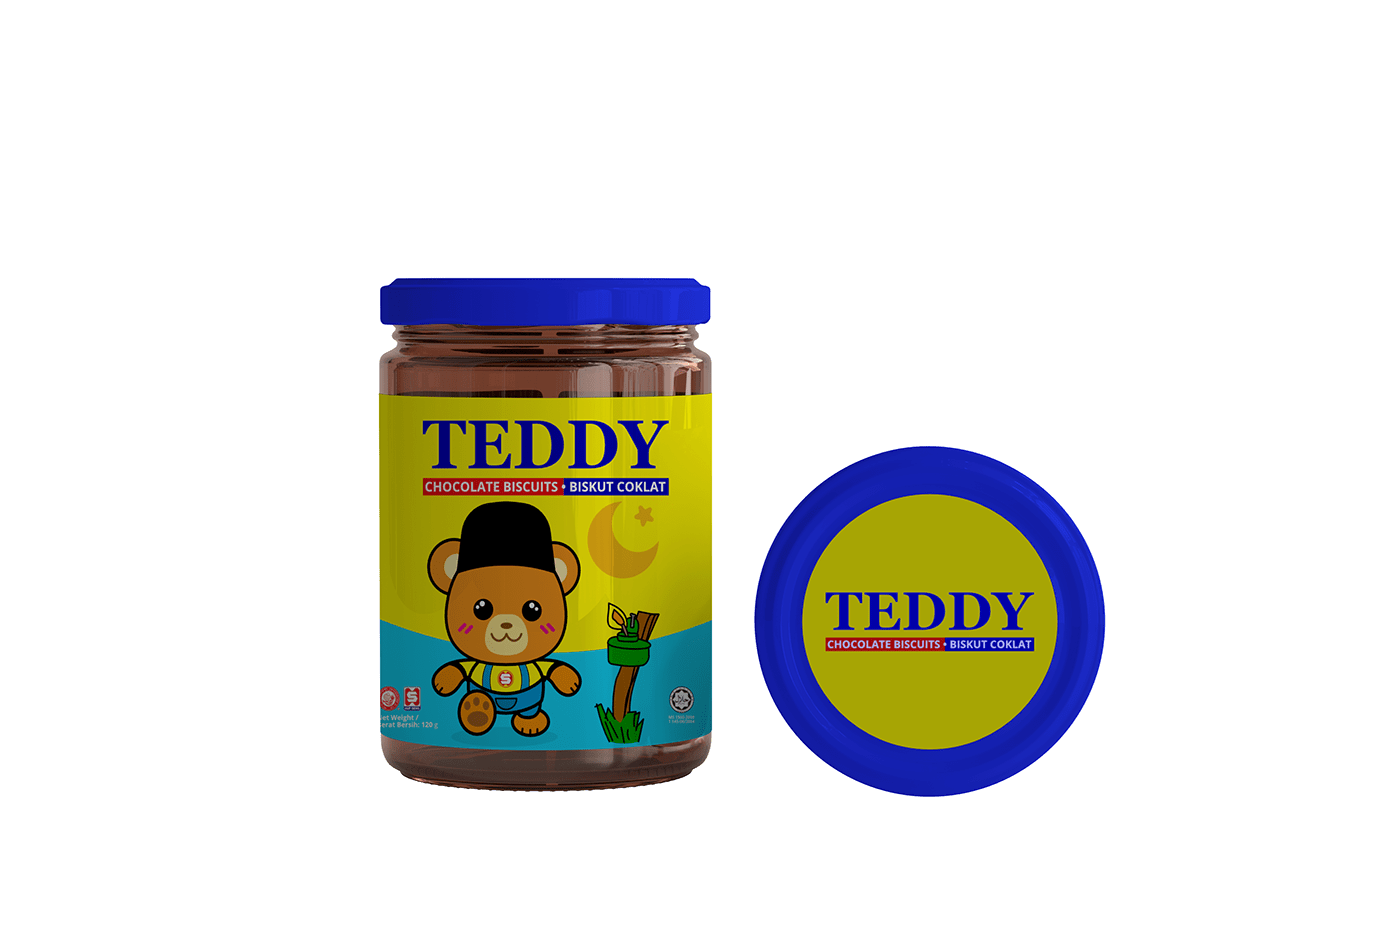 hup seng teddy packaging design teddy biscuits